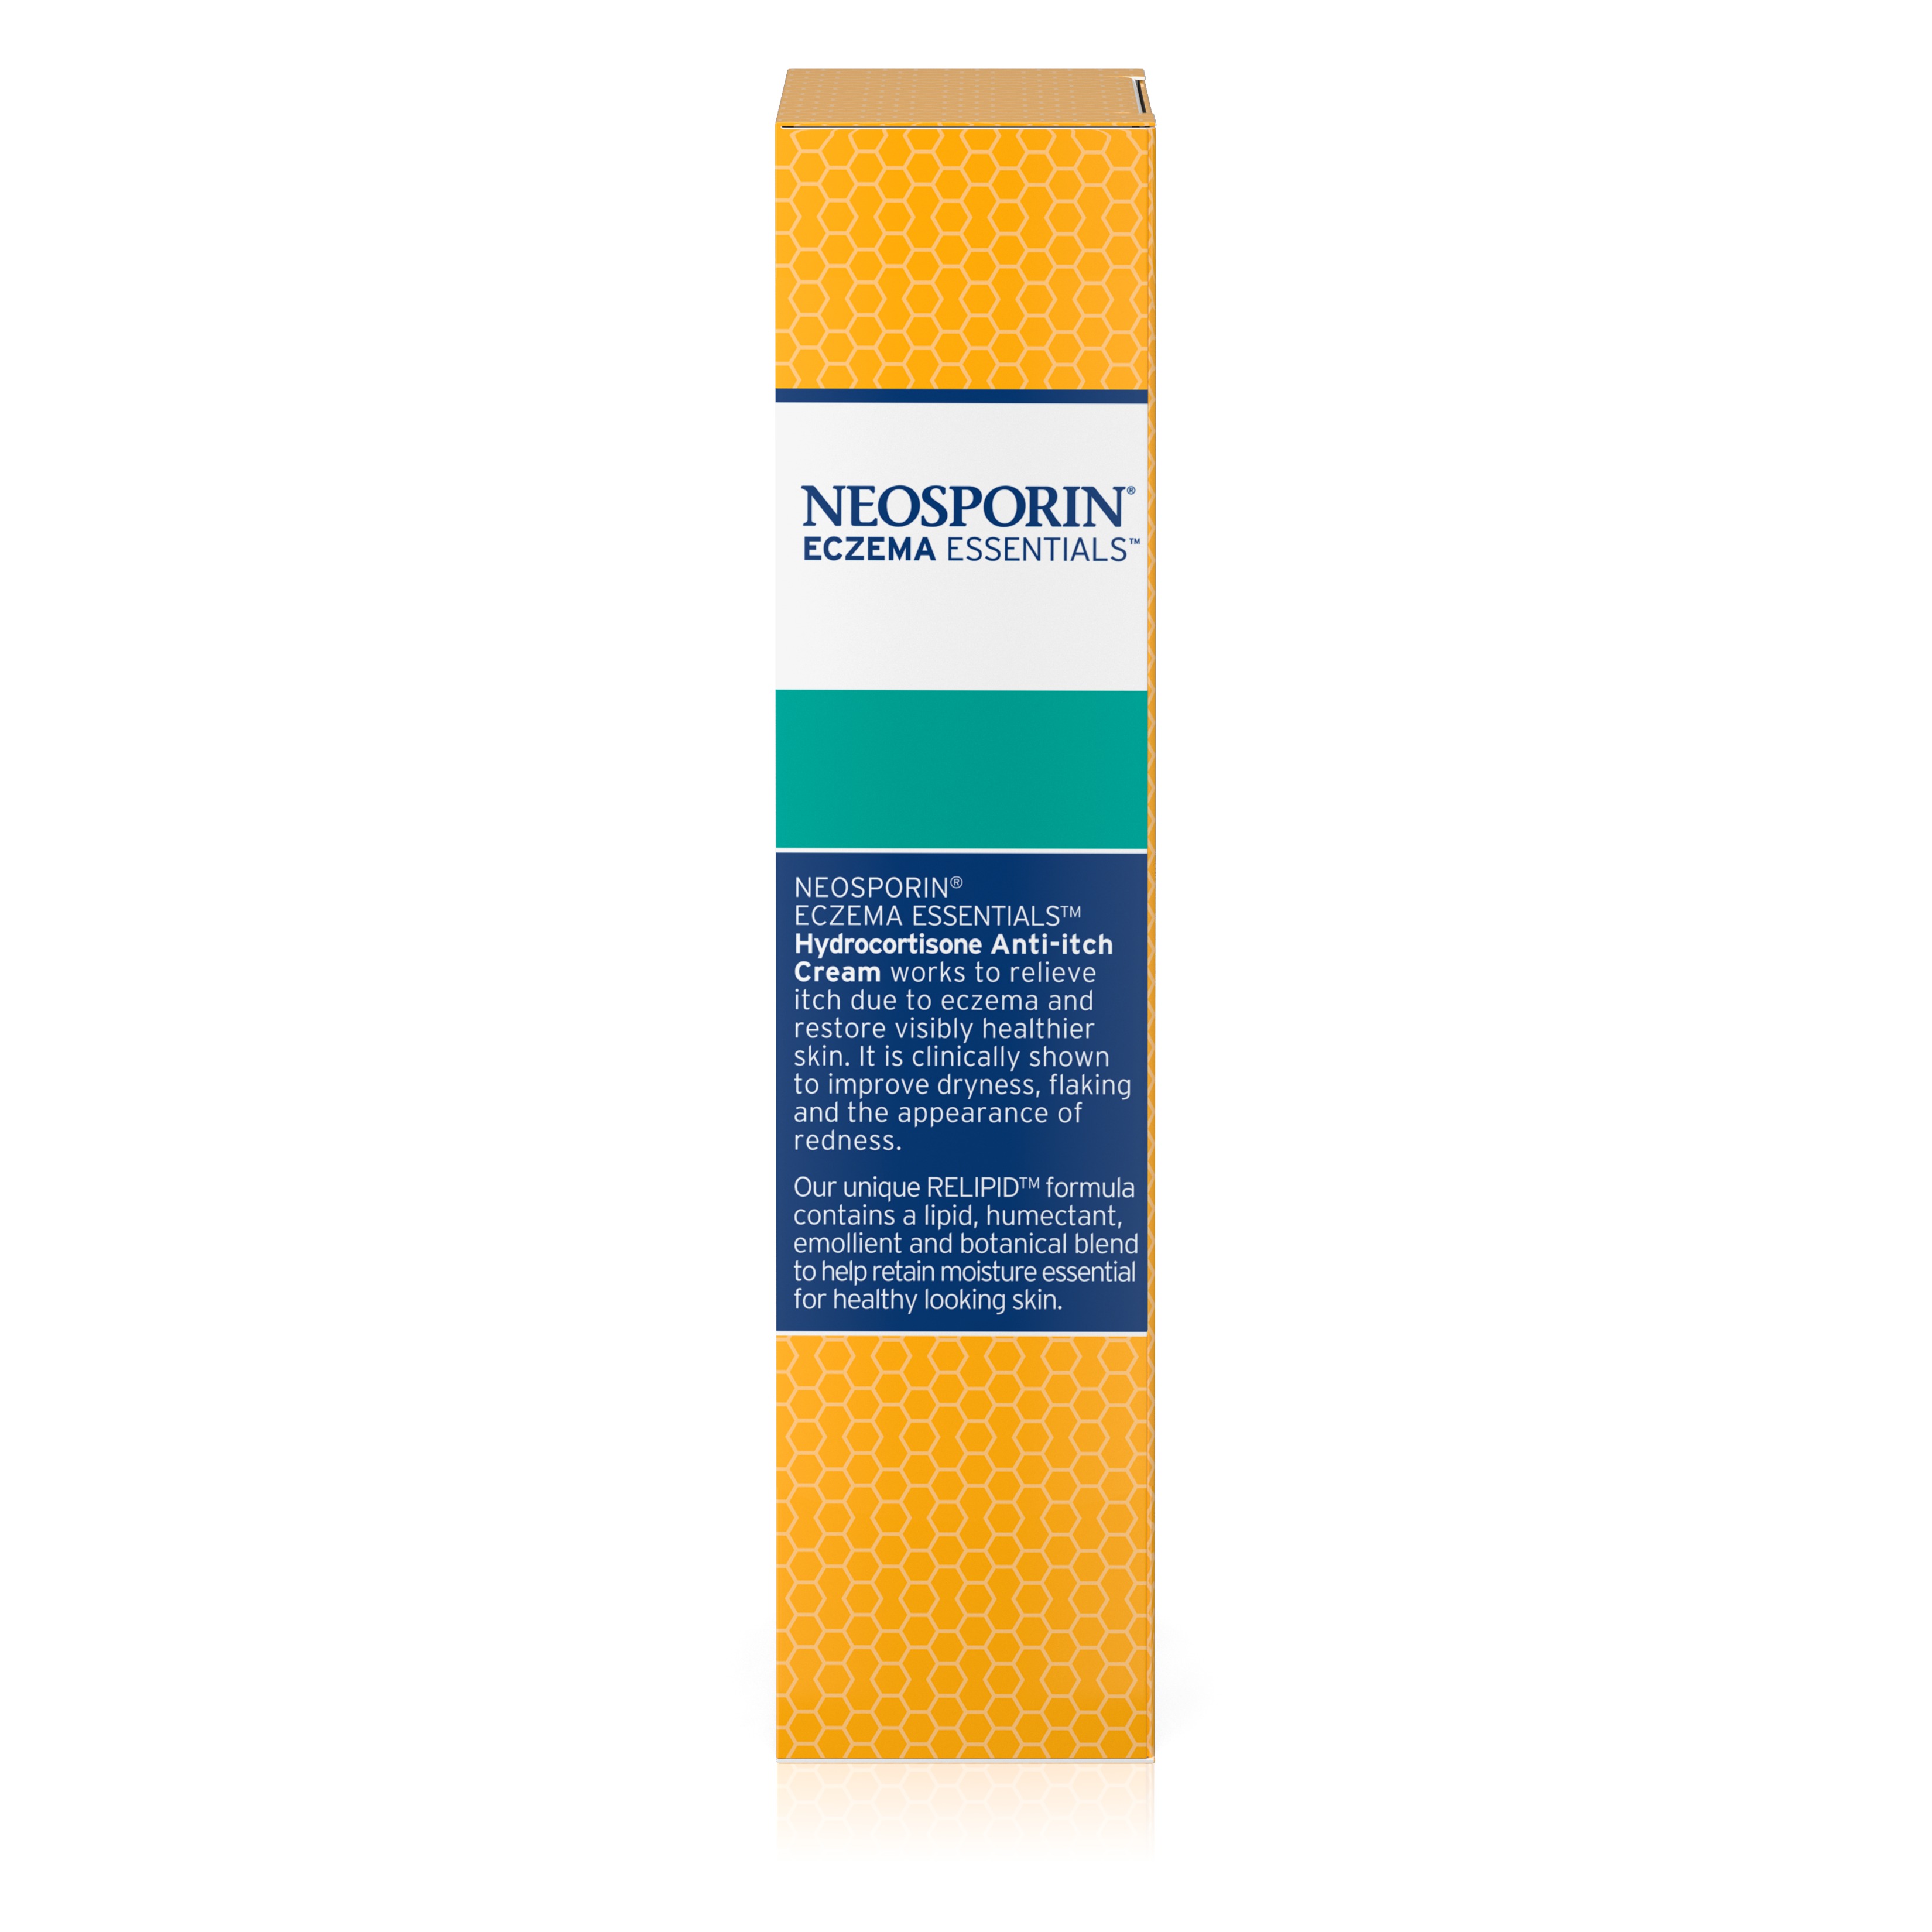 Neosporin Eczema Essentials Hydrocortisone Anti-Itch Cream, 1 Oz - image 5 of 6